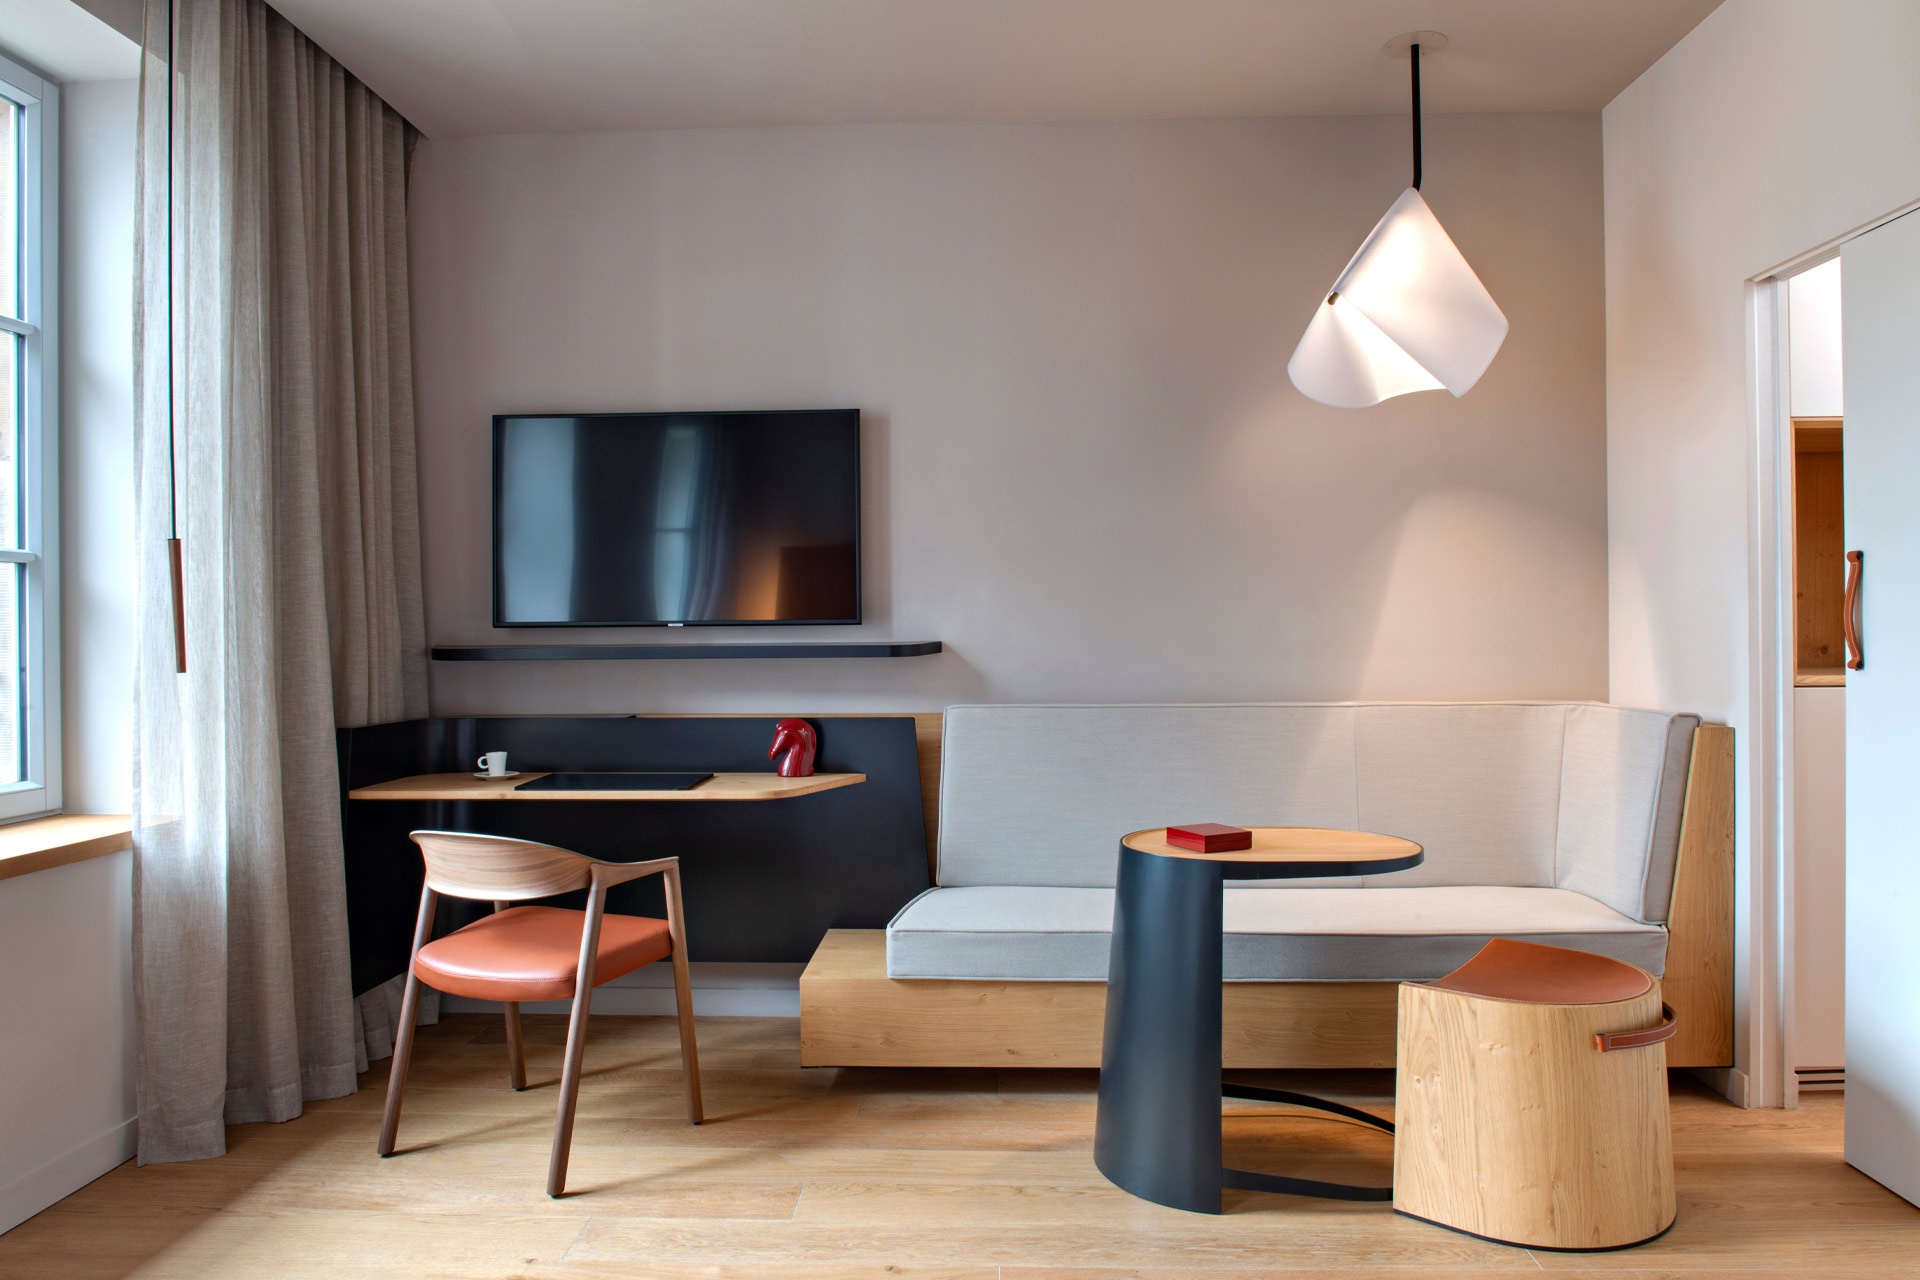 A new guestroom at Les Haras de Strasbourg in France